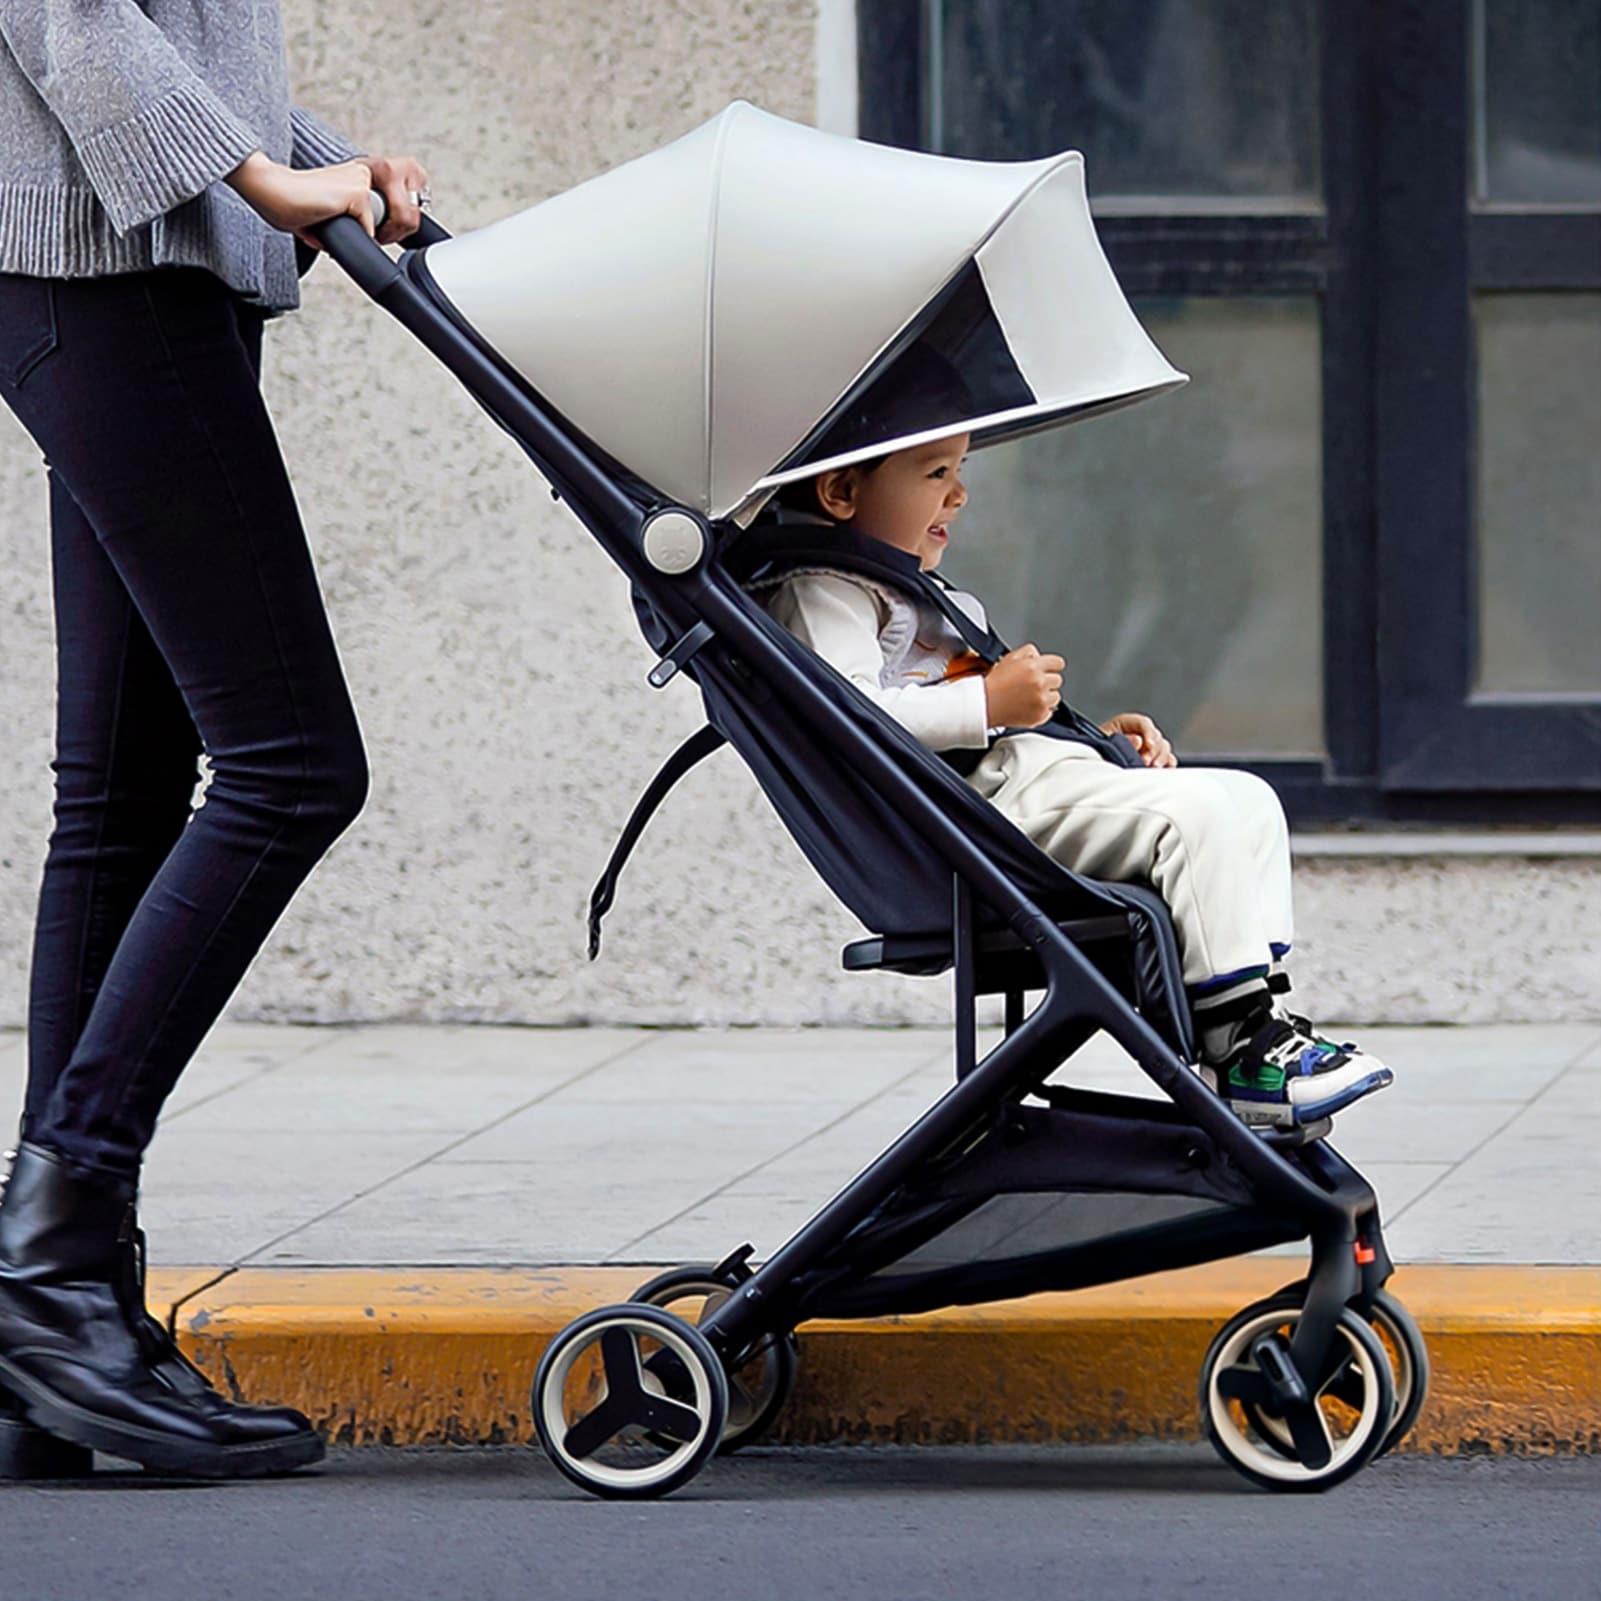 Babevy Lightweight Baby Stroller,Compact Umbrella Stroller